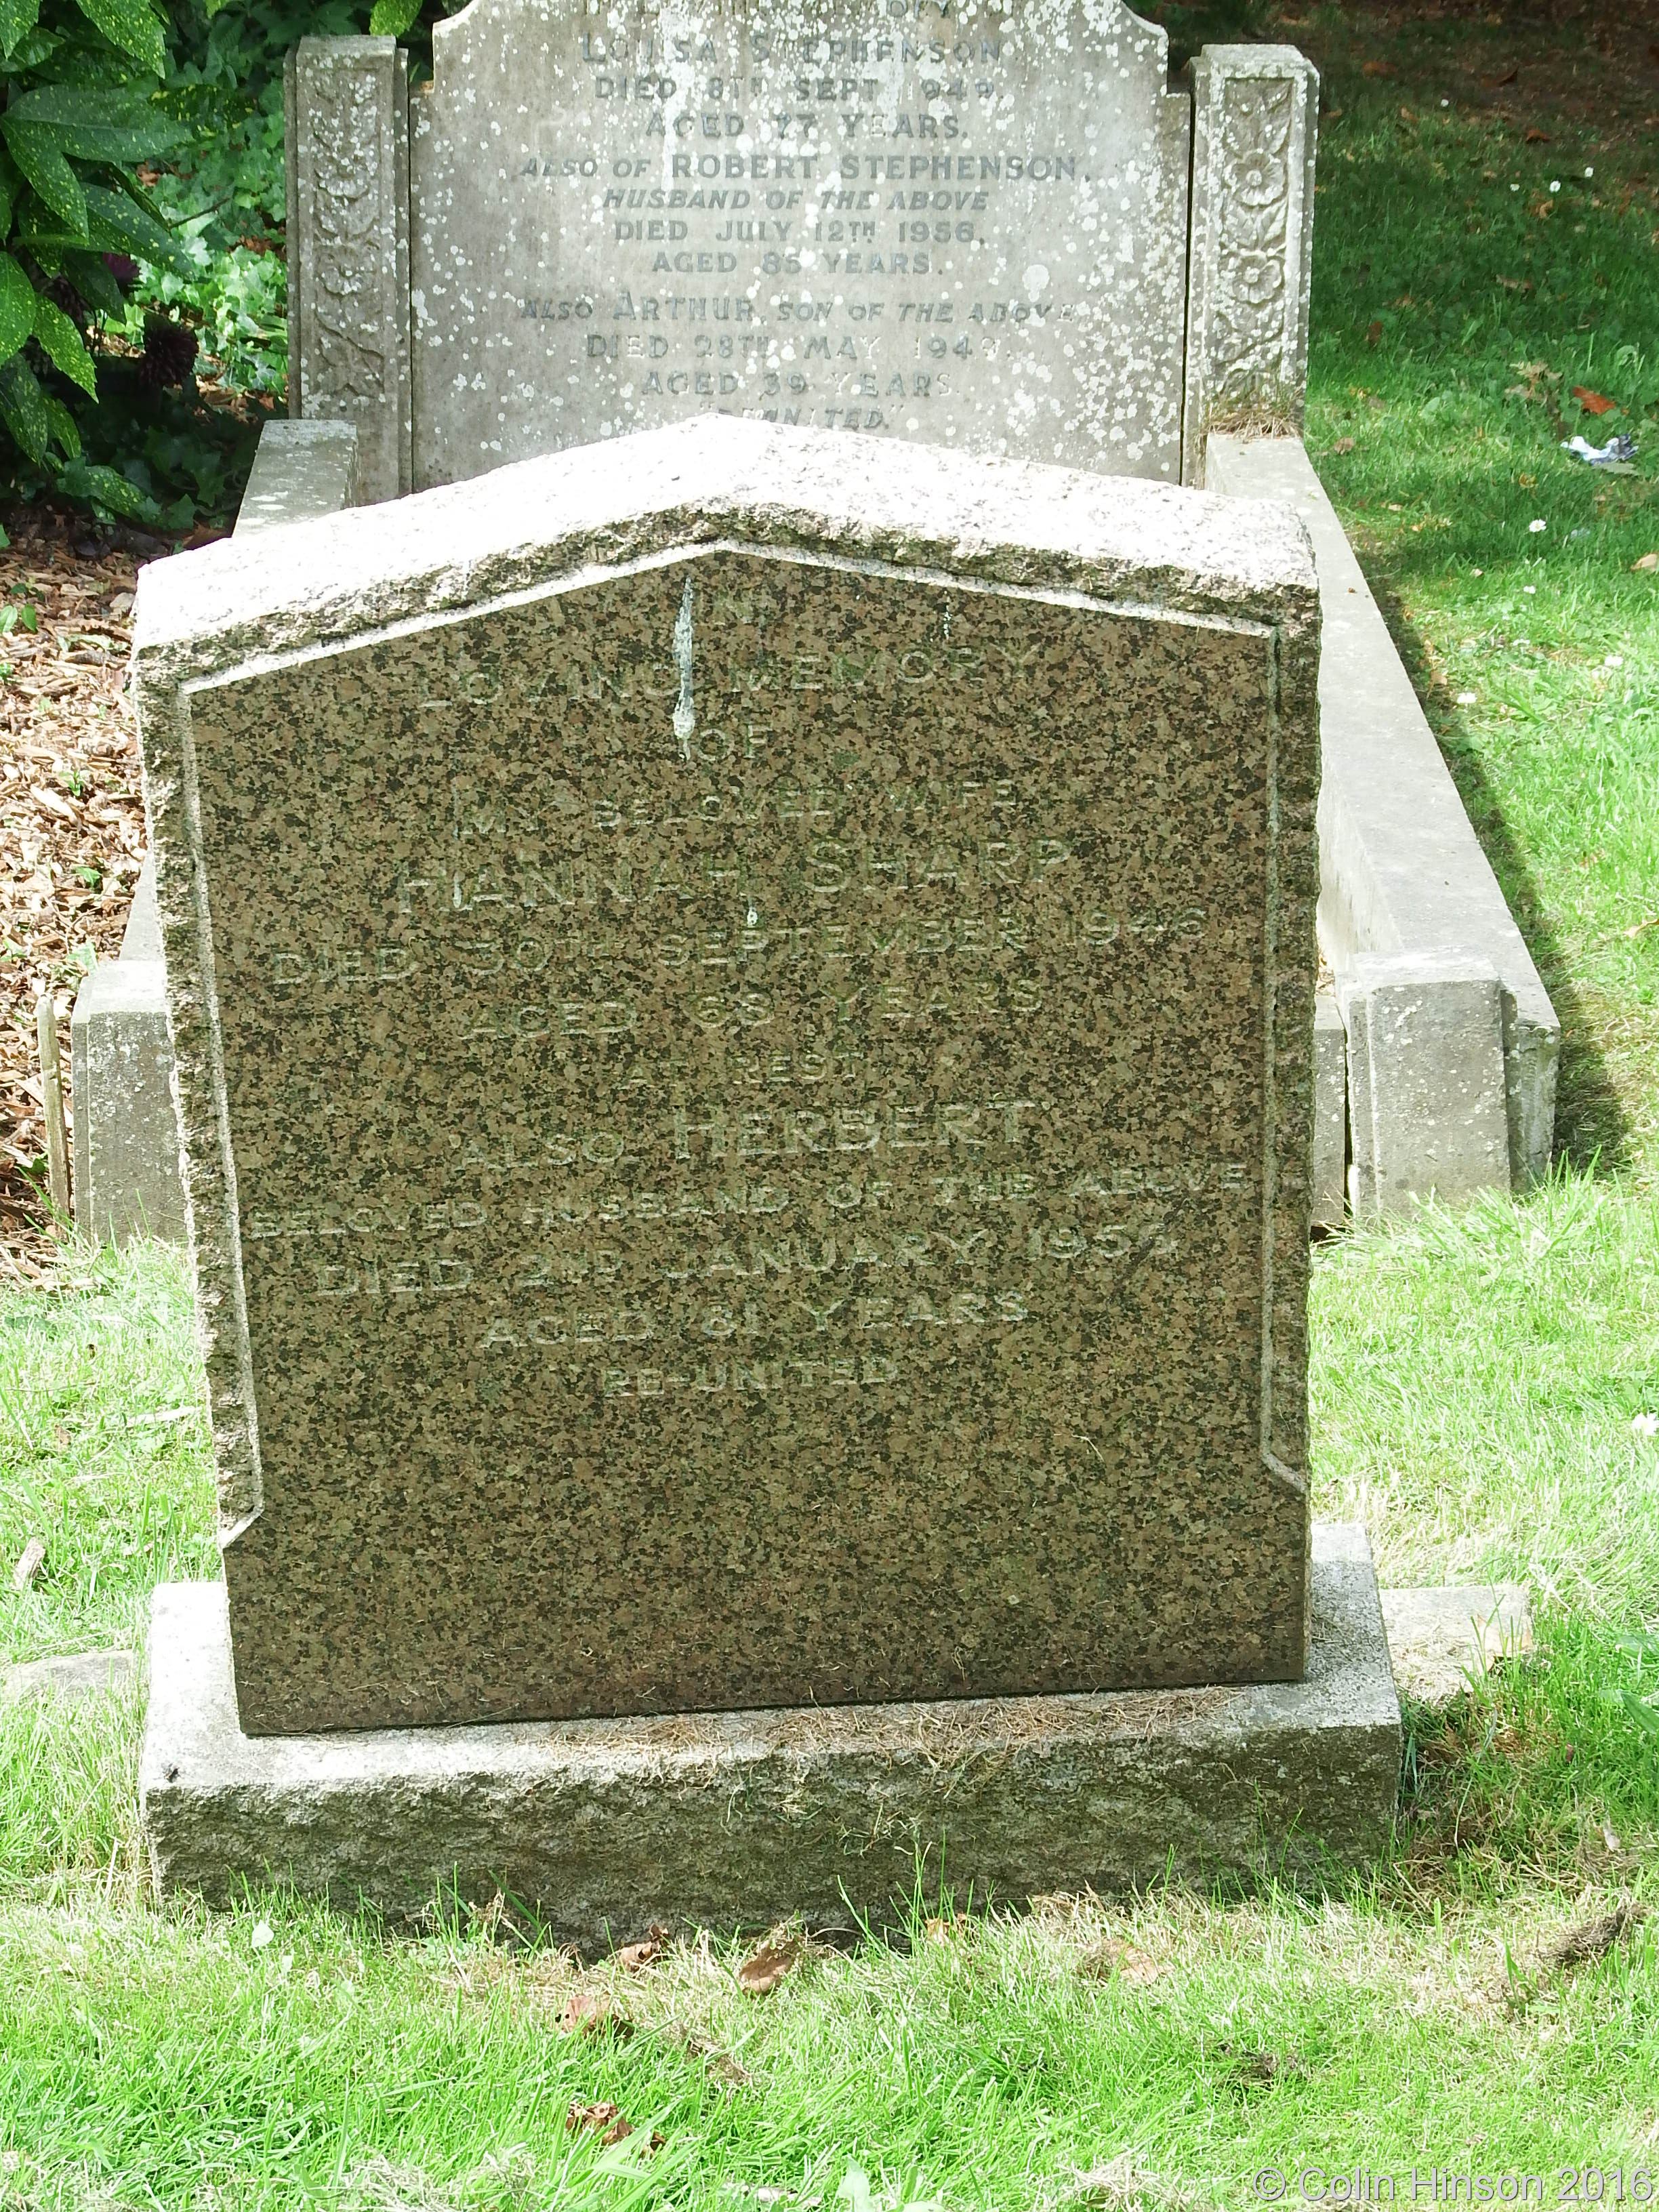 GENUKI: Driffield Cemetery gravestones etc., Yorkshire (East Riding)